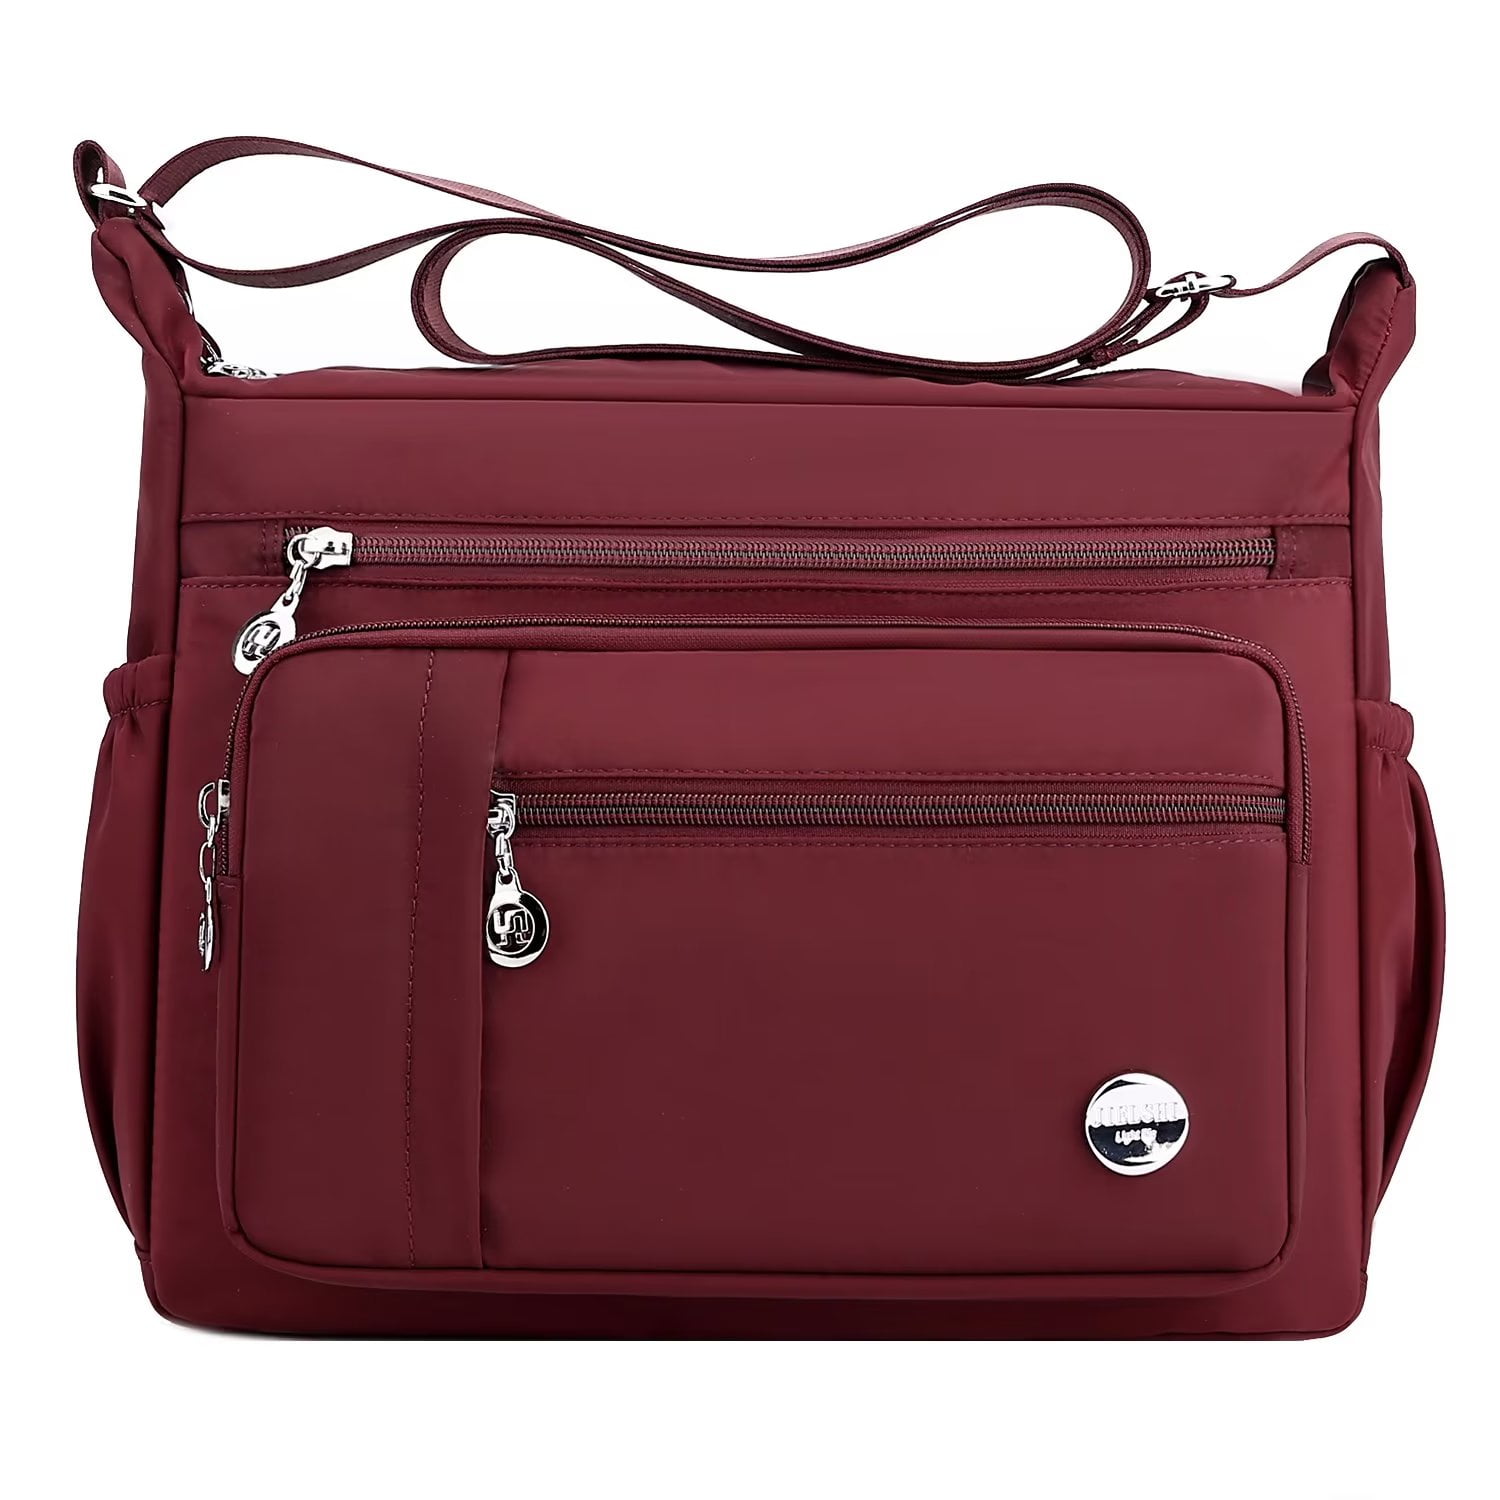 MINTEGRA Women Shoulder Handbag Roomy Multiple Pockets Bag Ladies ...